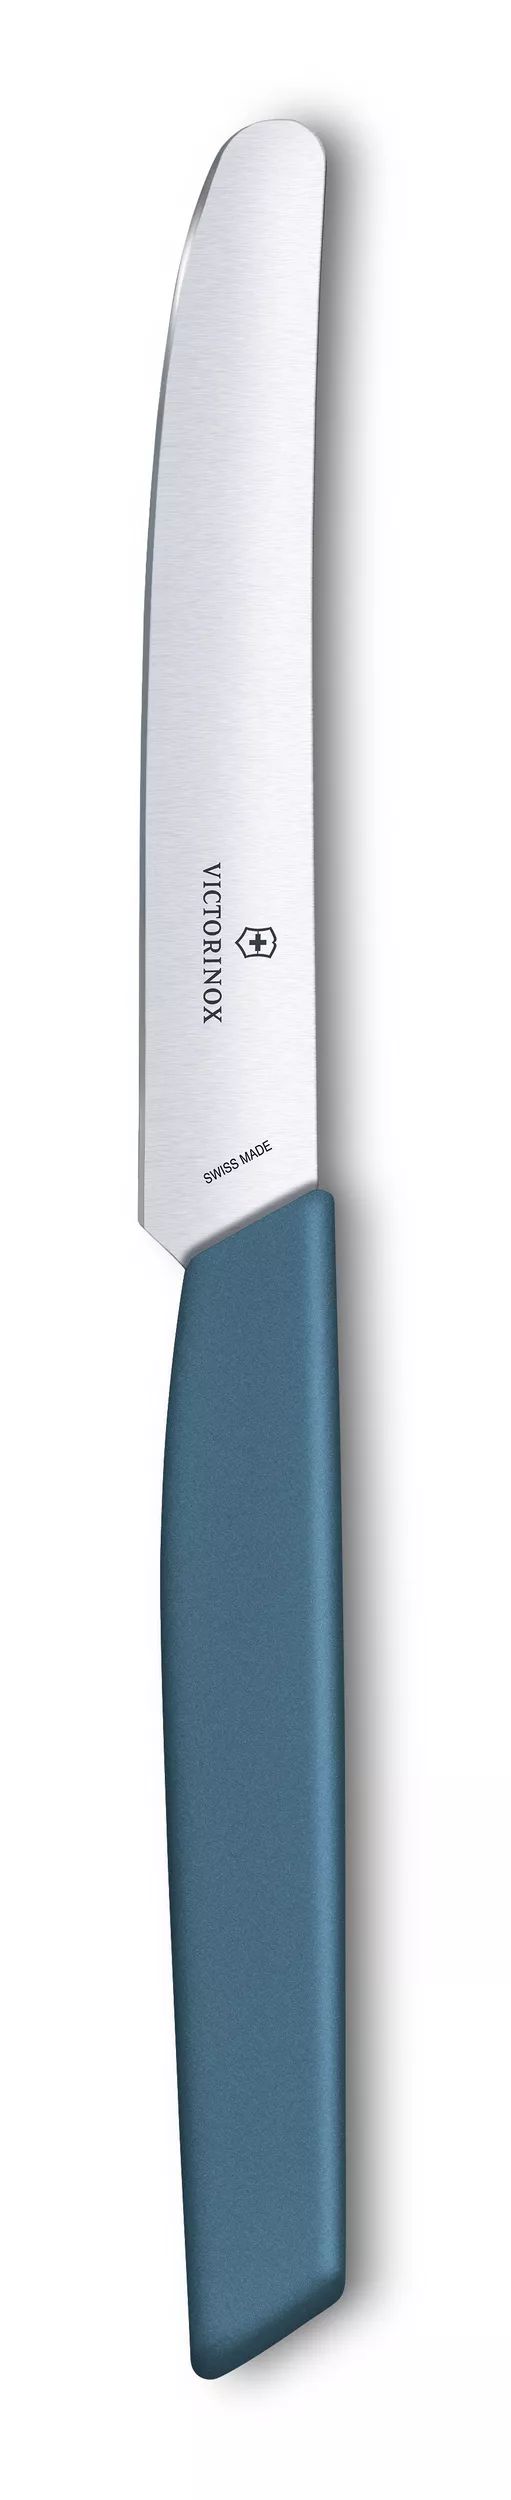 Cuchillo para tomate y de mesa Swiss Modern - 6.9006.112